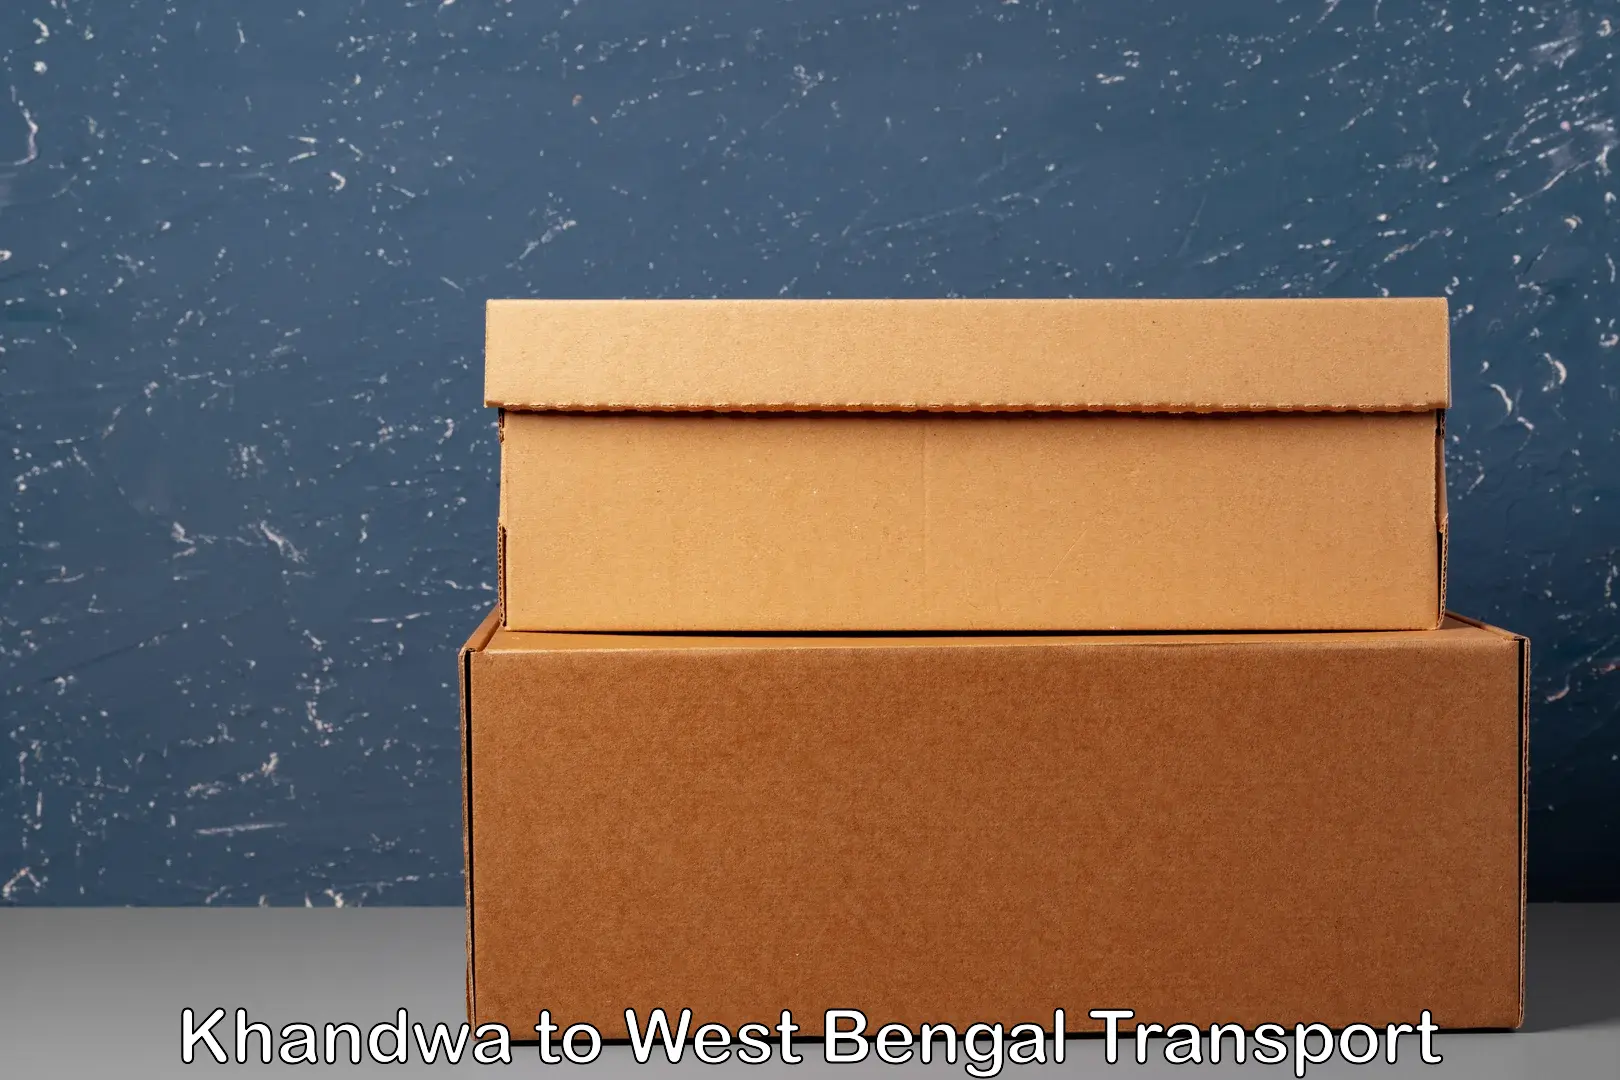 Bike transfer in Khandwa to West Bengal